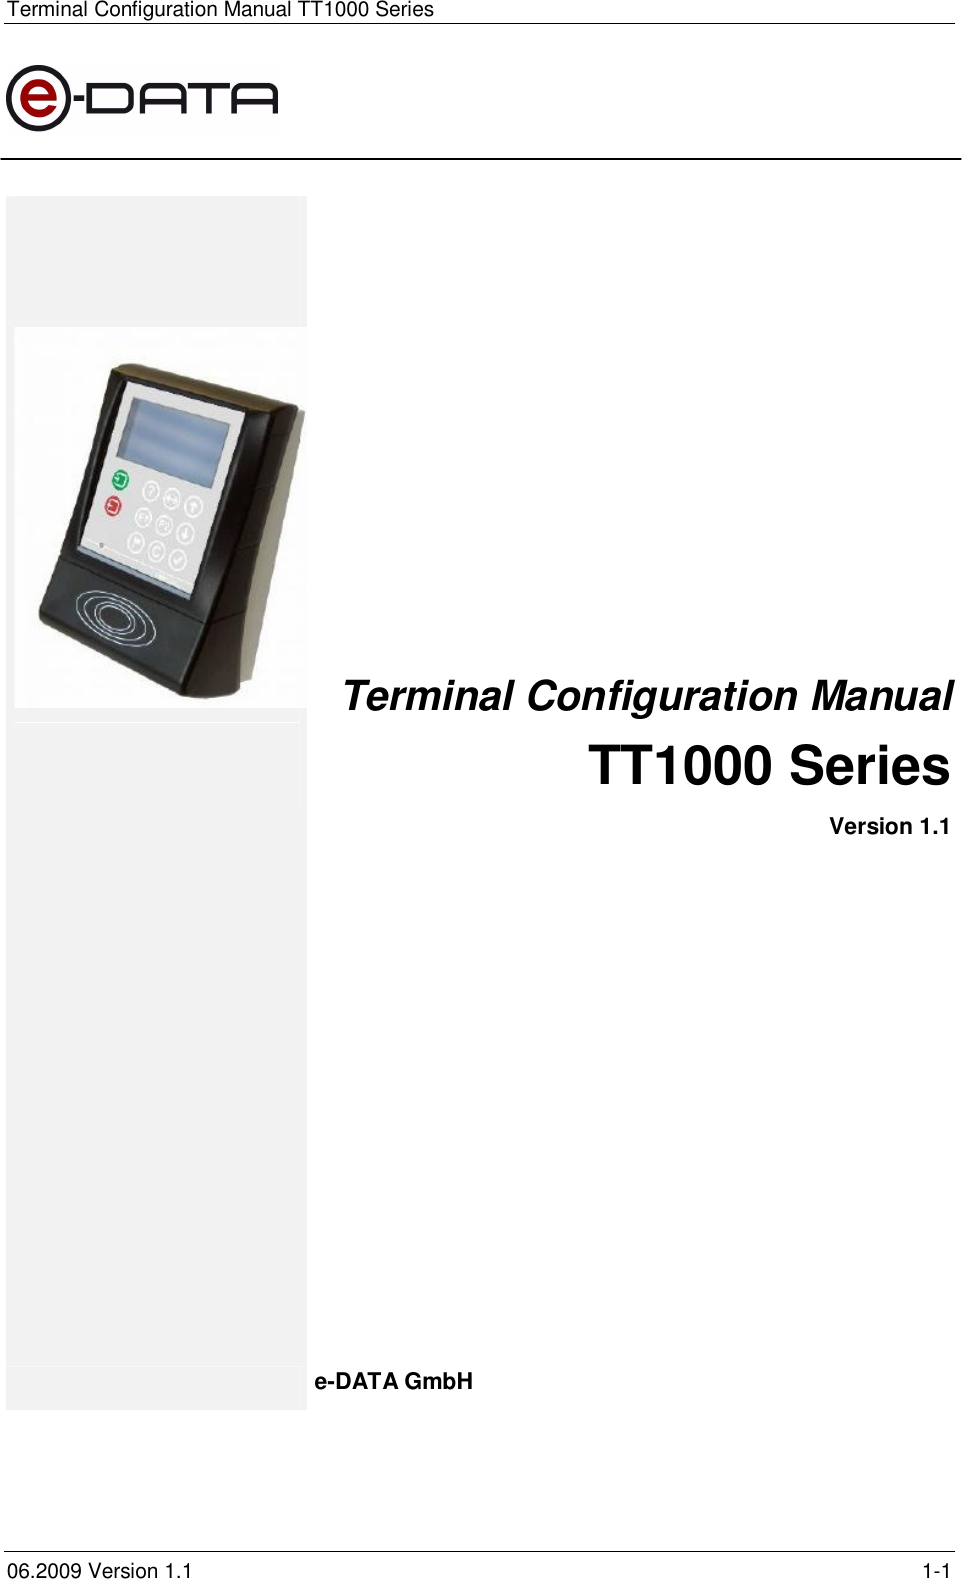 Terminal Configuration Manual TT1000 Series06.2009 Version 1.1 1-1Terminal Configuration ManualTT1000 SeriesVersion 1.1e-DATA GmbH